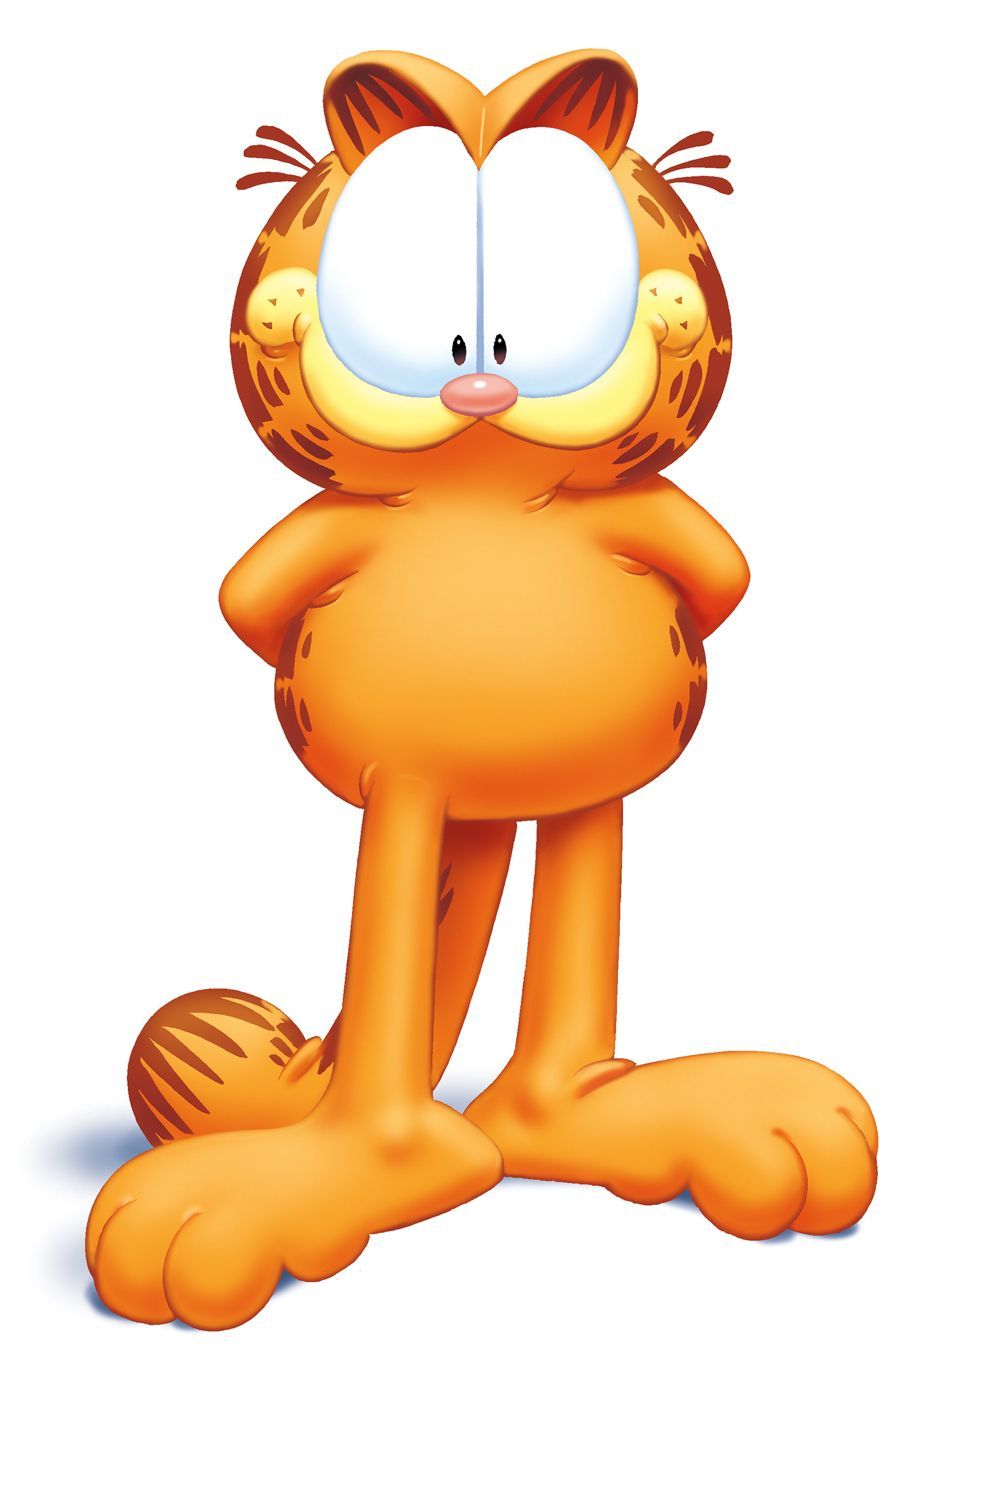 Garfield The Cat Wallpapers